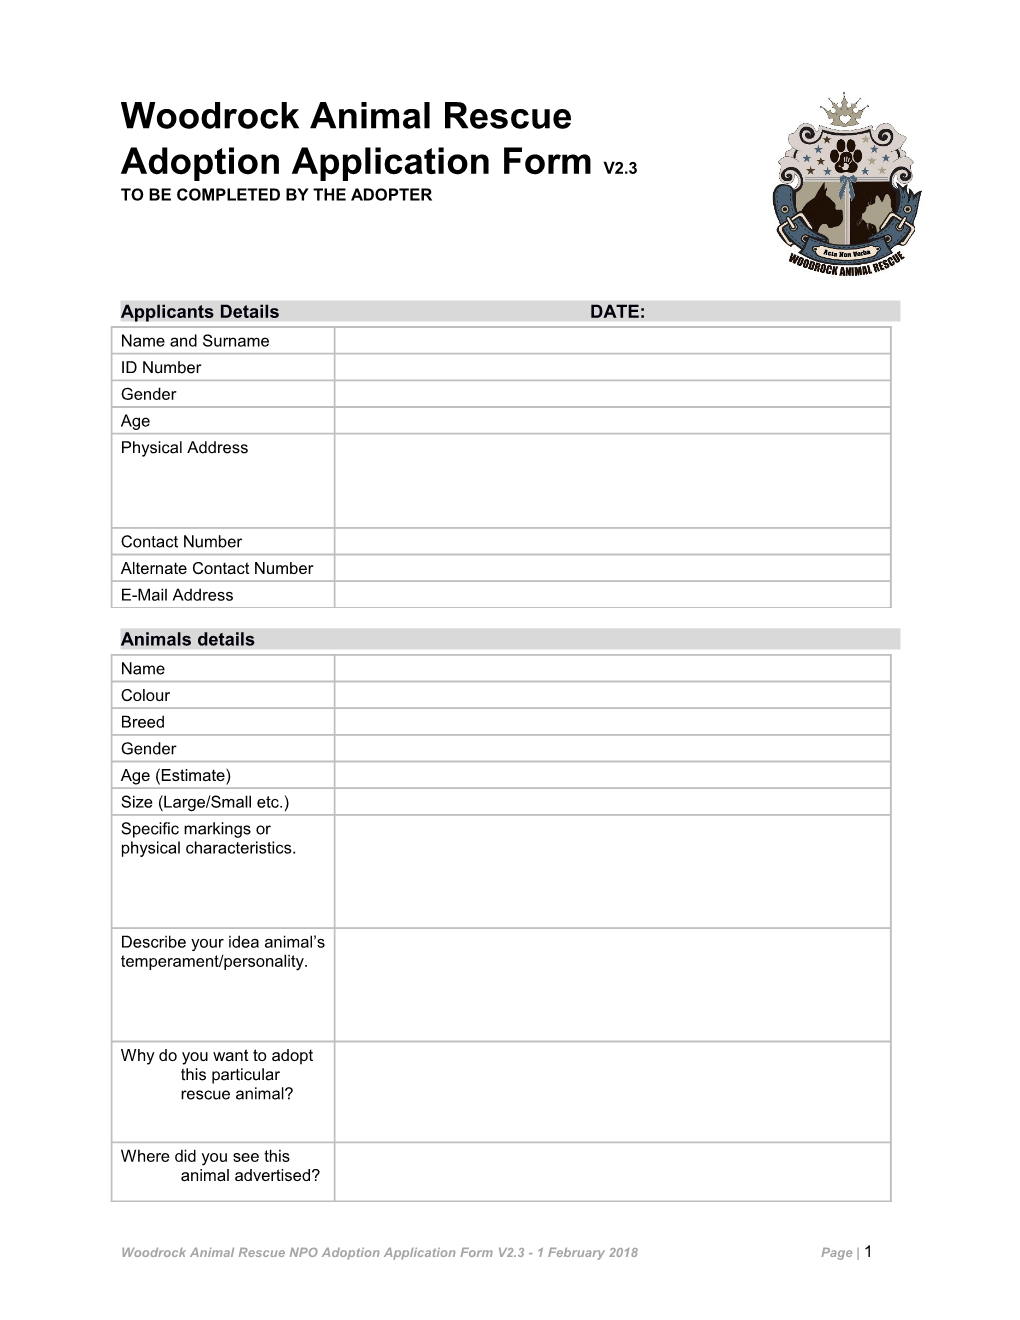 Woodrock Adoption Application Form